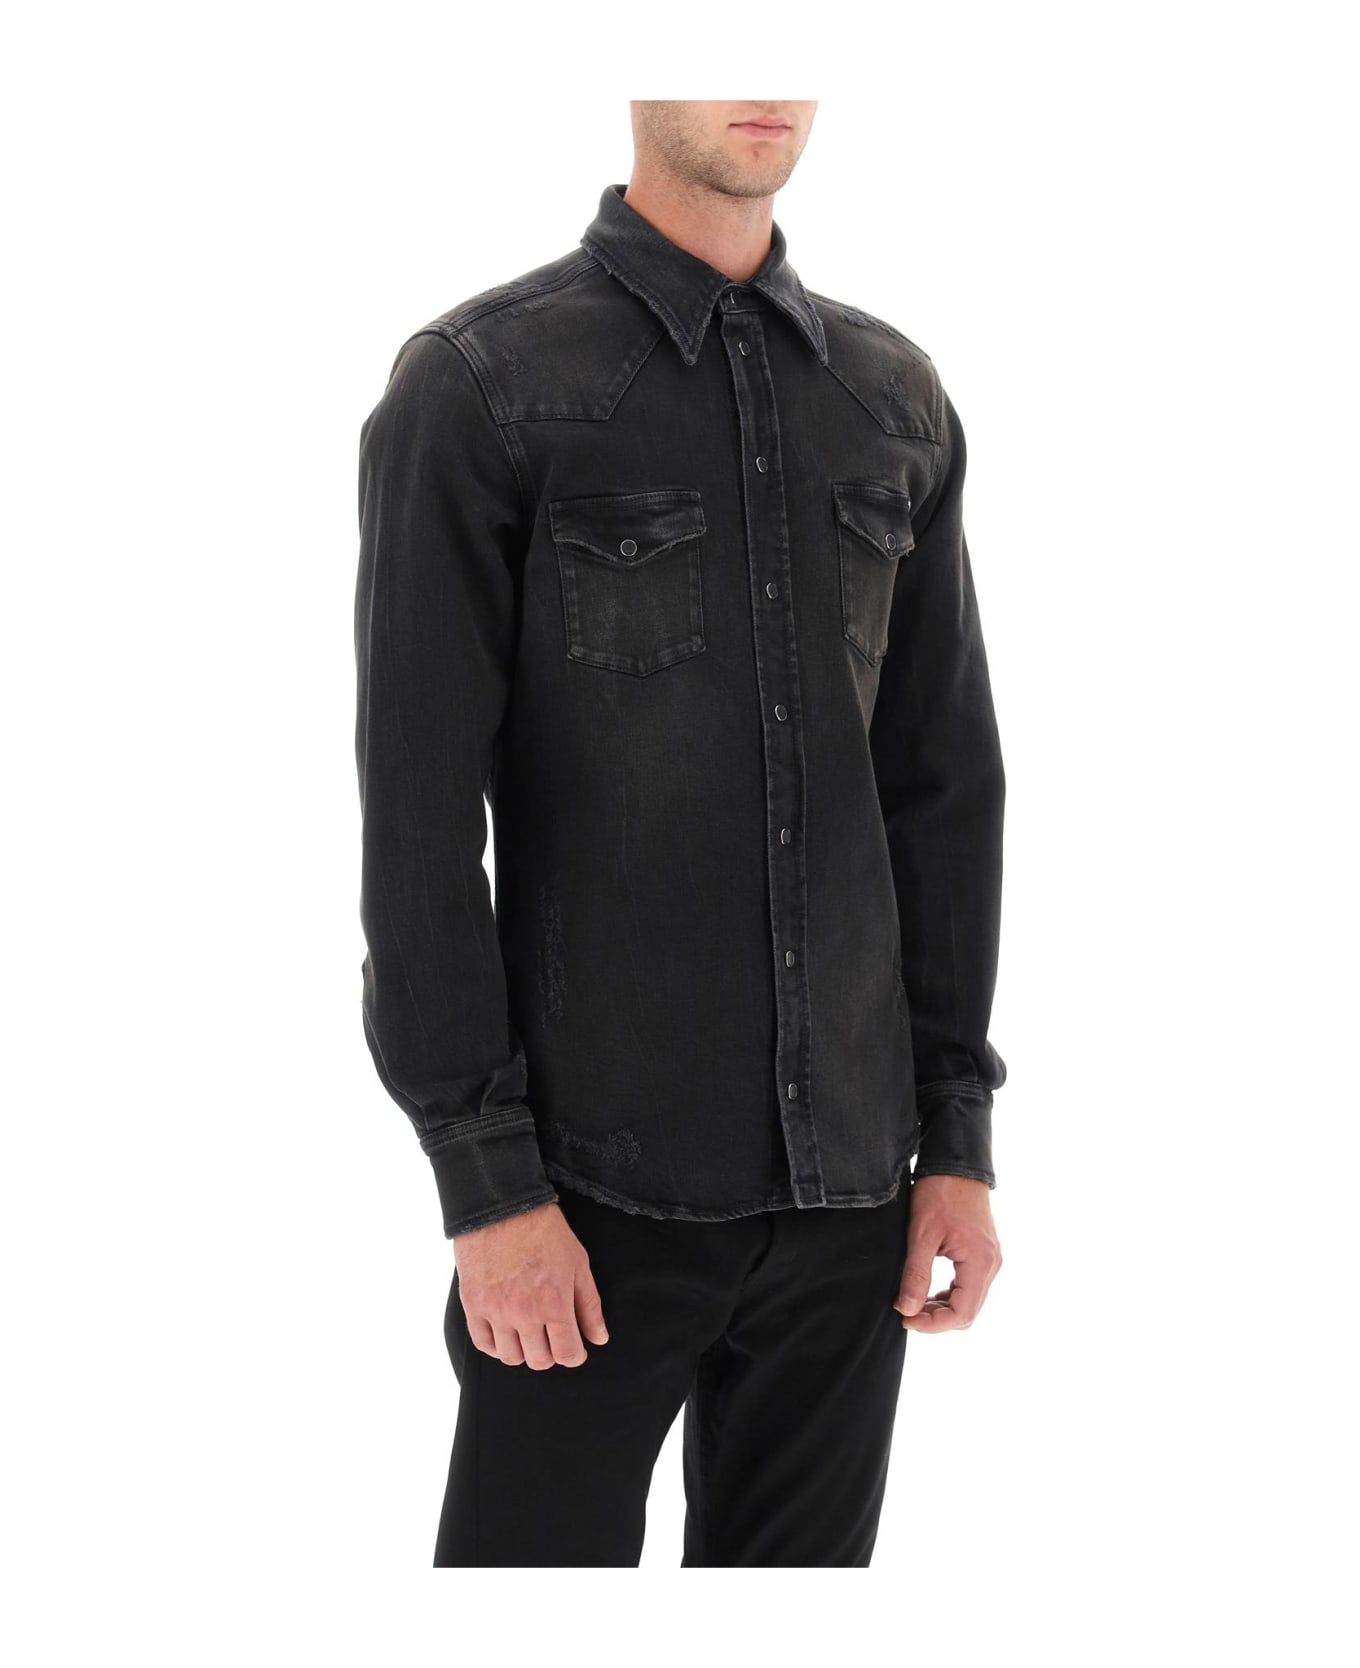 Dolce & Gabbana Distressed Denim Western Shirt - VARIANTE ABBINATA (Black)